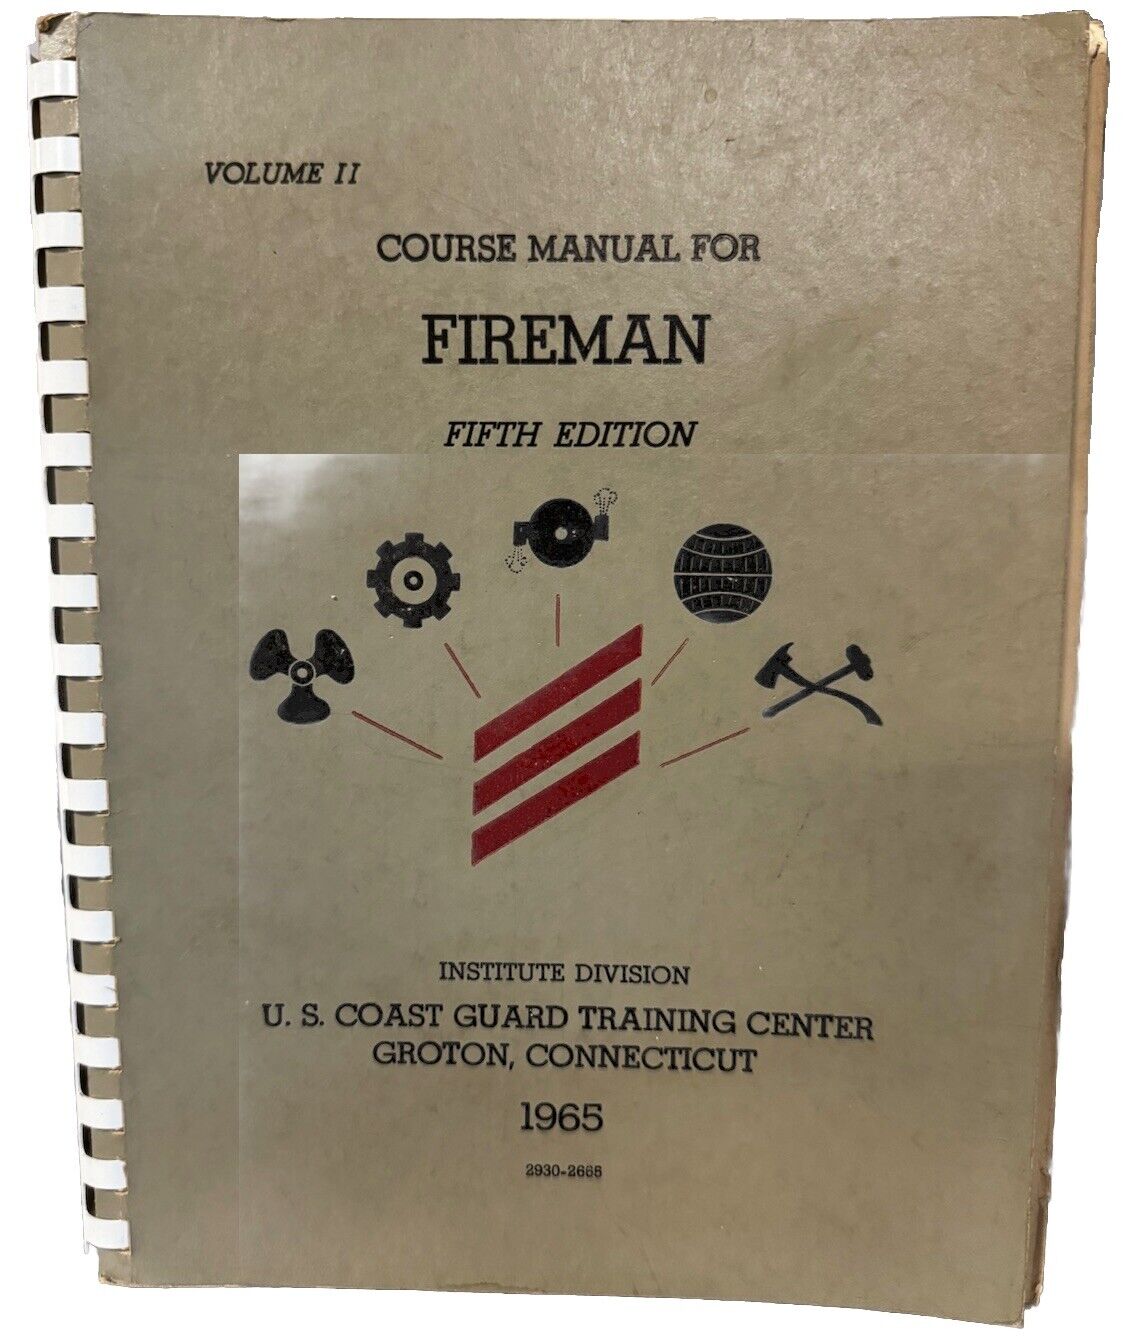 1965 U.S. Coast Guard Training Center Course Manual For Fireman Volume 2